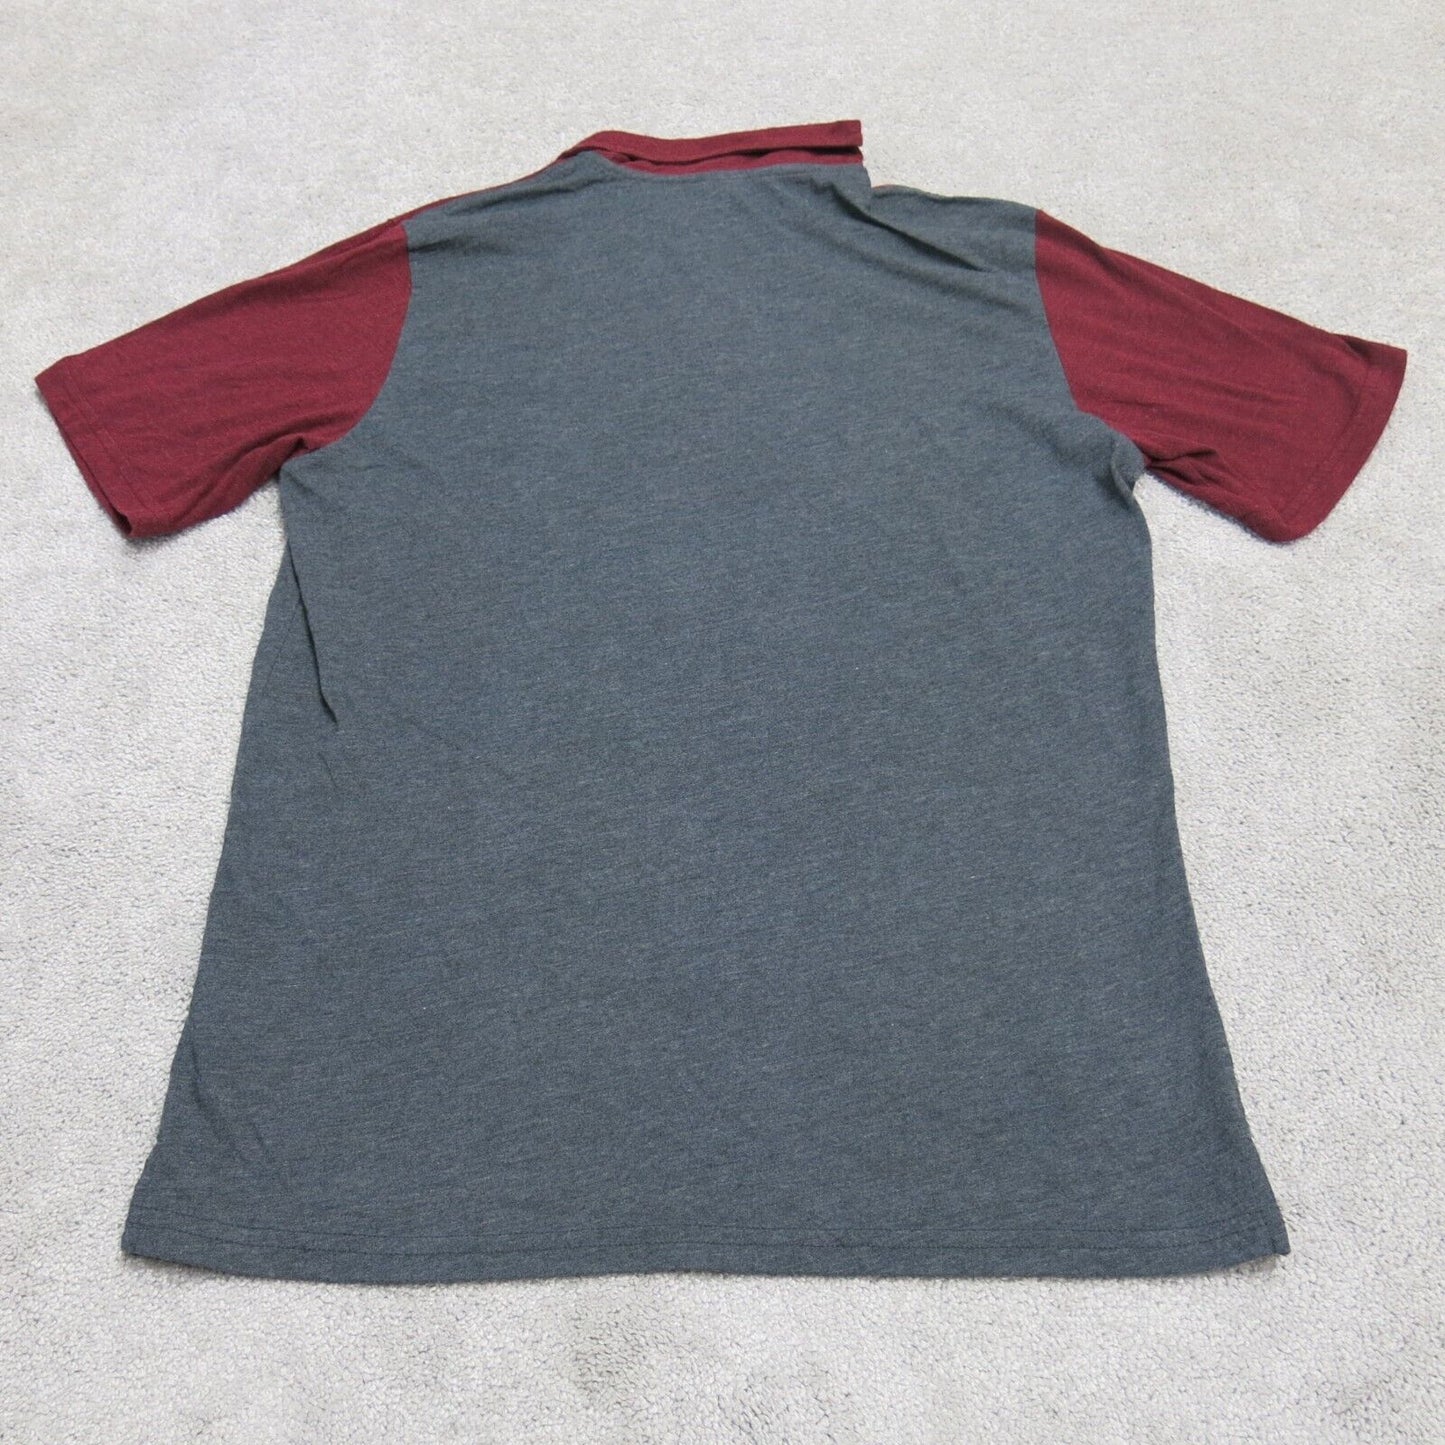 Vintage Men Casual Polo Shirt Short Sleeves Chest Pocket Logo Red Gray SZ Medium